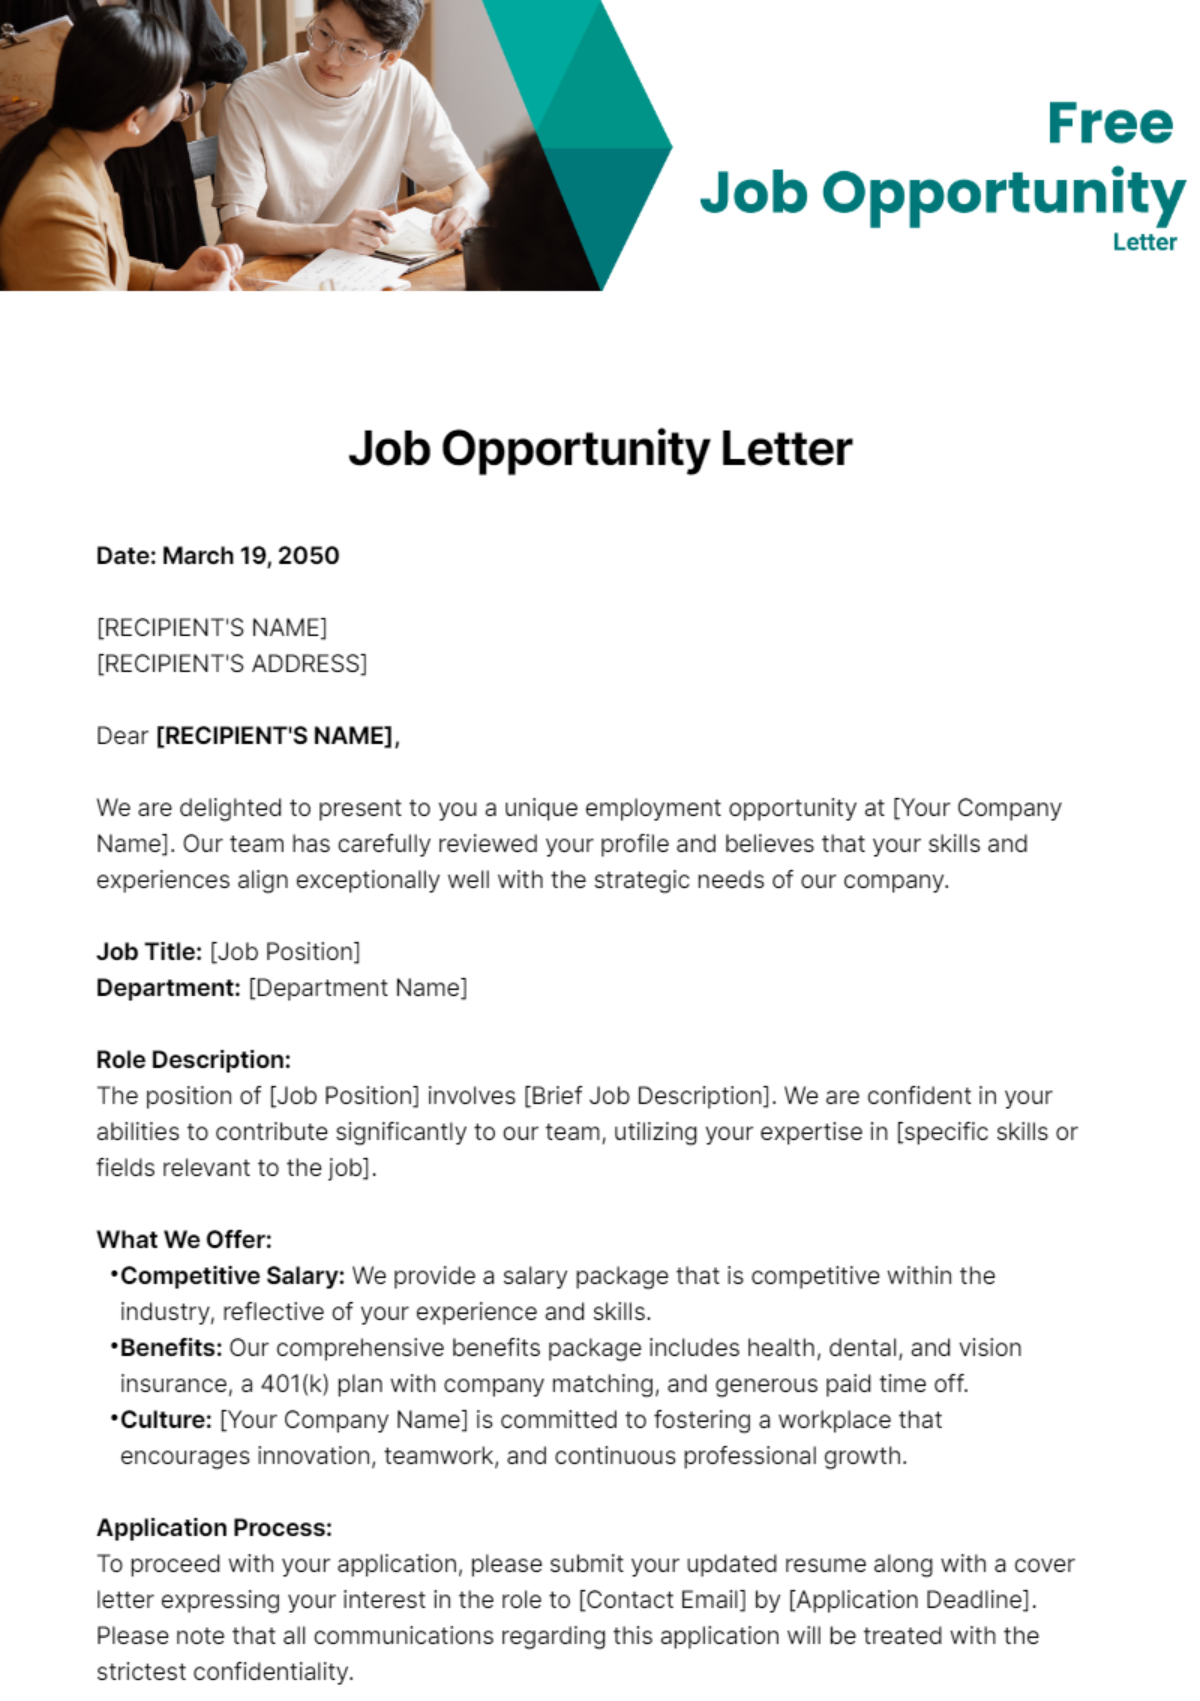 Job Opportunity Letter Template